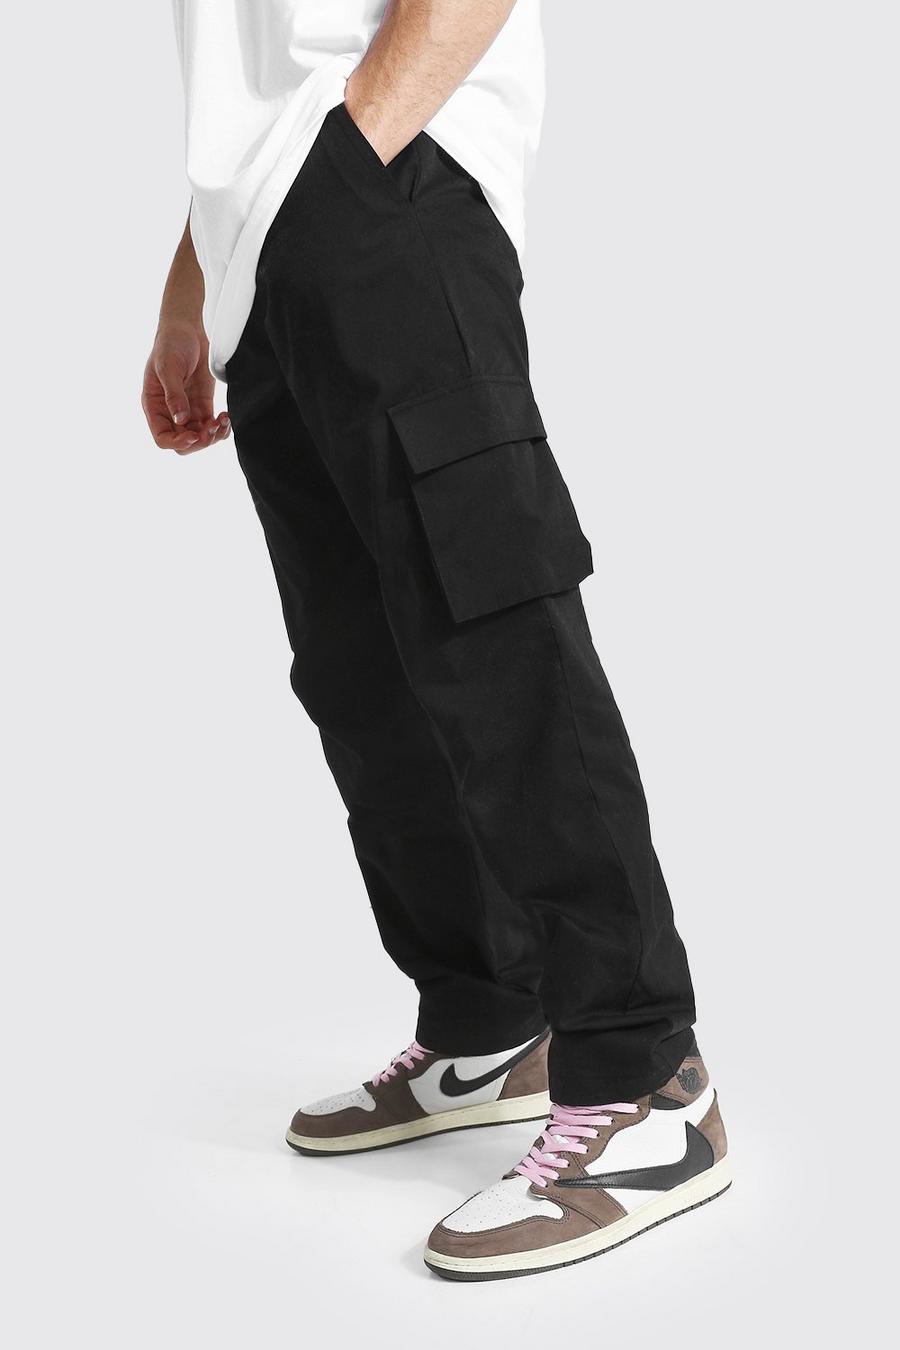 Pantaloni Chino Tall stile Cargo rilassati, Black nero